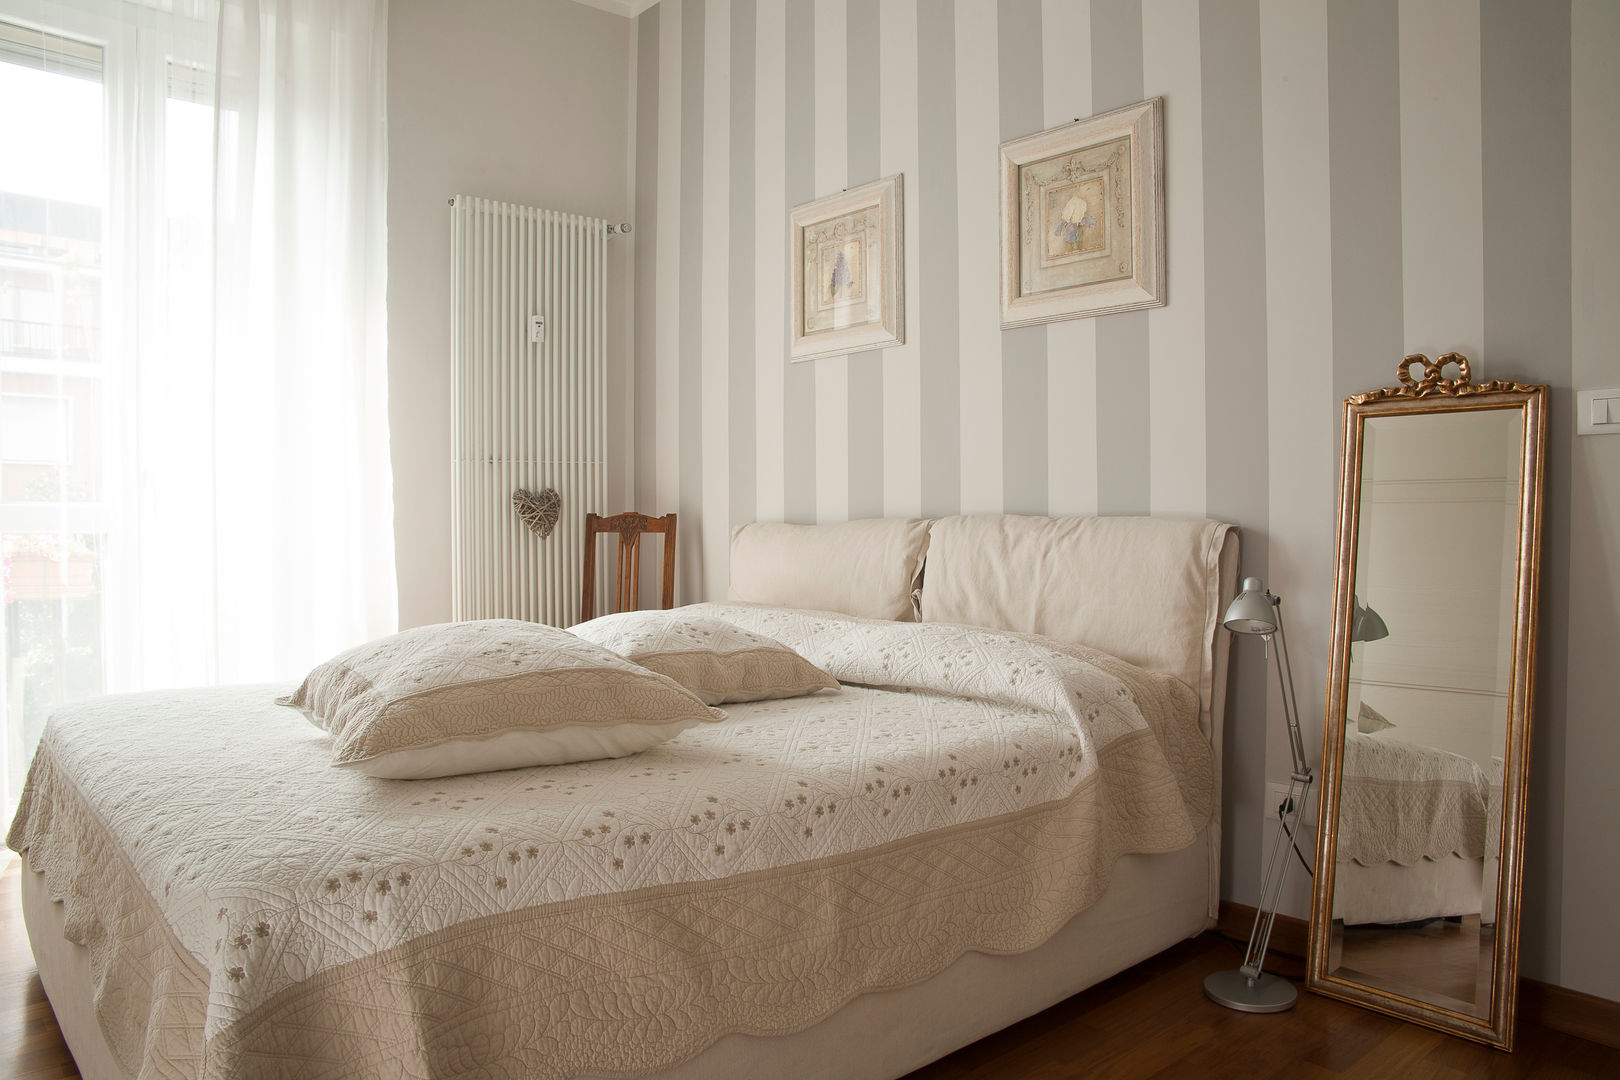 _Mondrian Home_, Alessandro Multari Ingegnere - I AM puro ingegno italiano Alessandro Multari Ingegnere - I AM puro ingegno italiano Bedroom